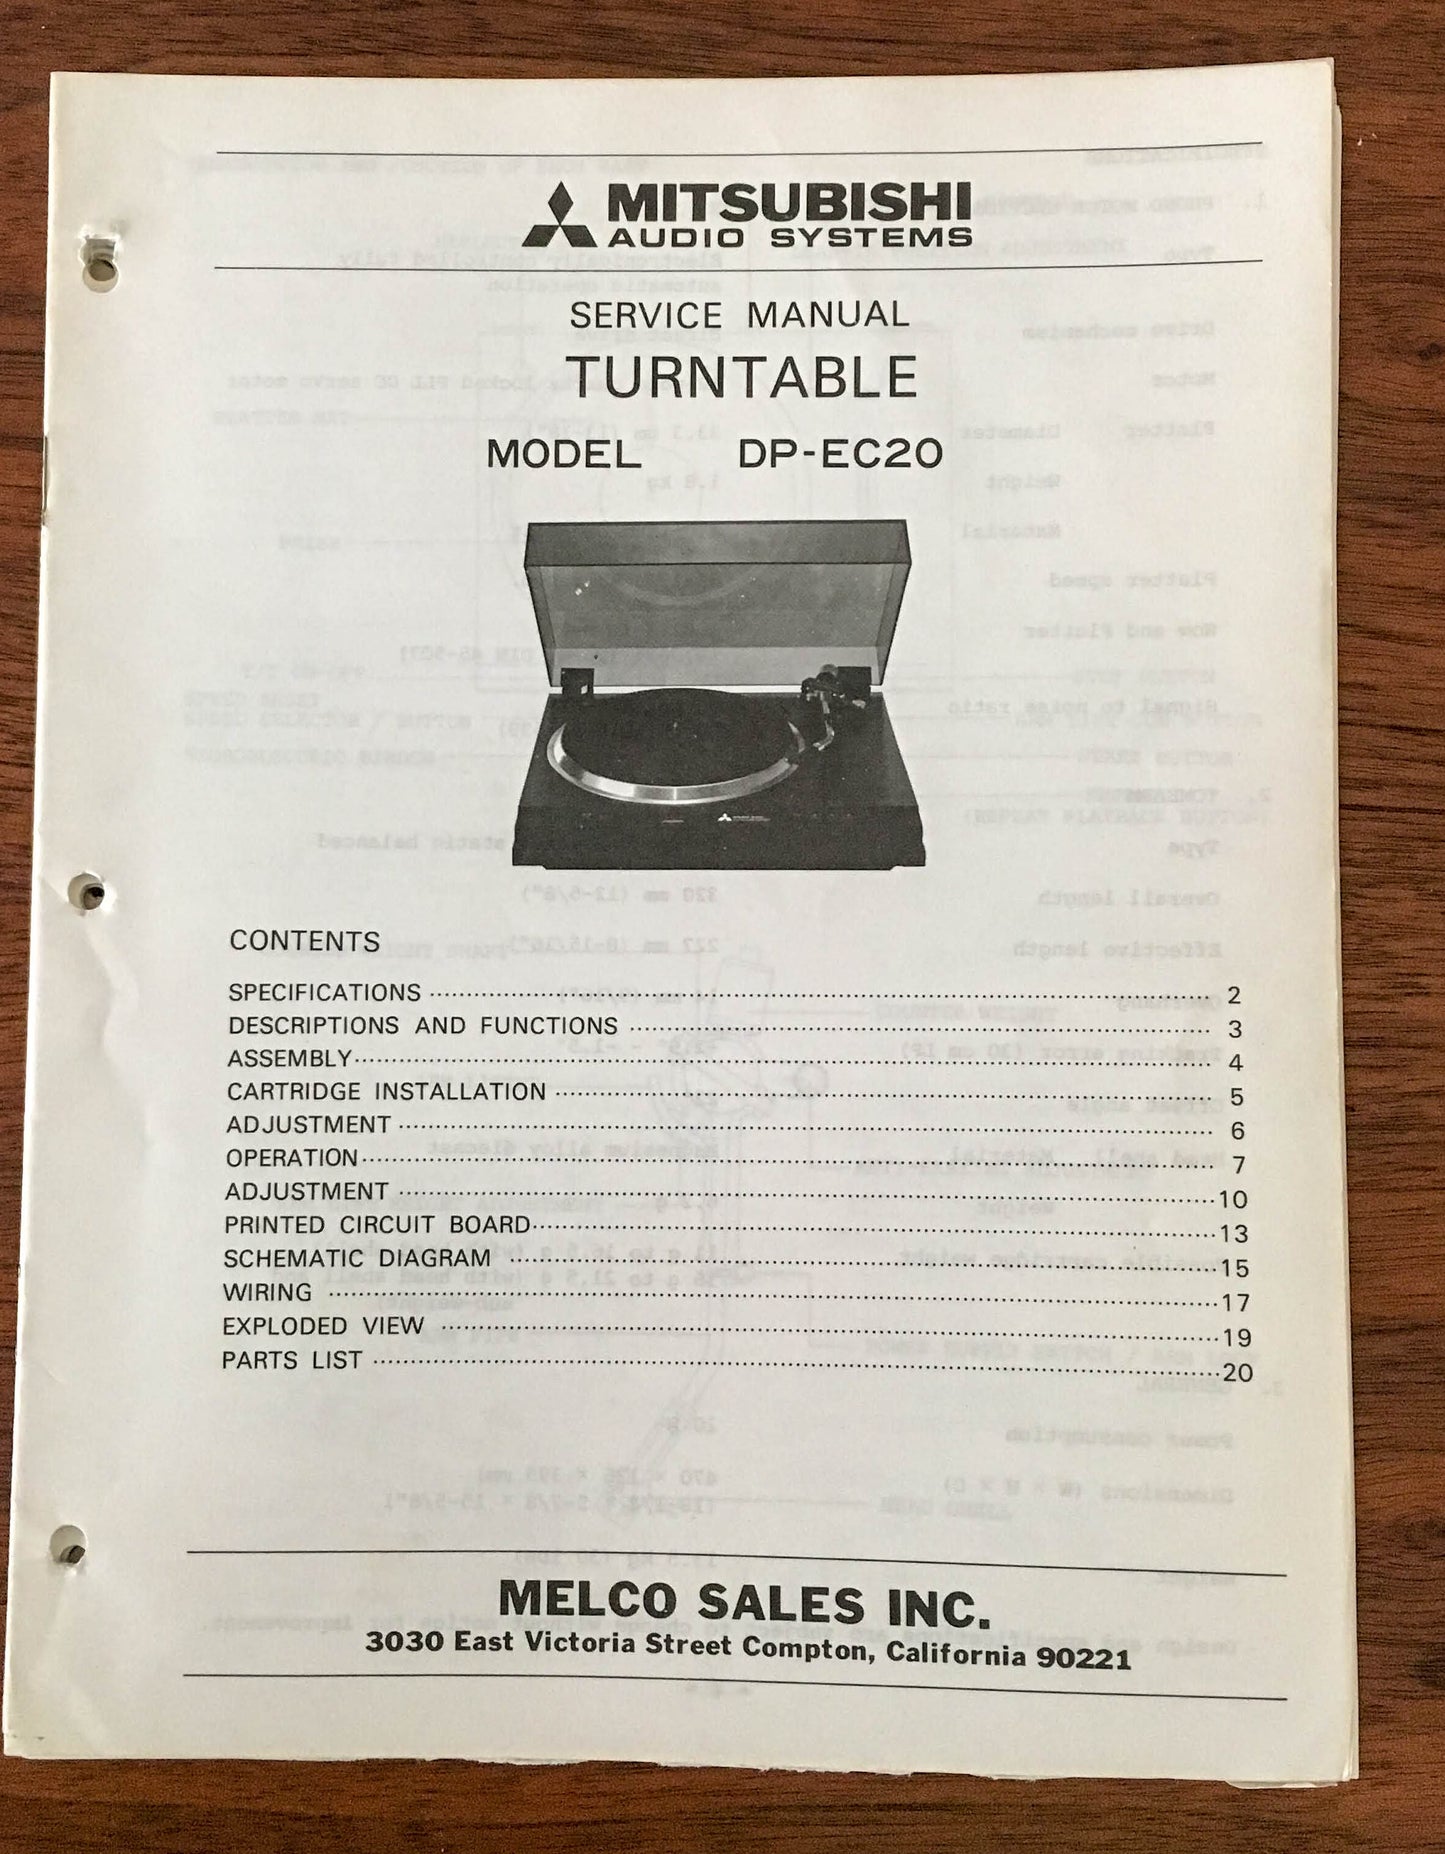 Mitsubishi DP-EC20 Record Player / Turntable Service Manual *Original*